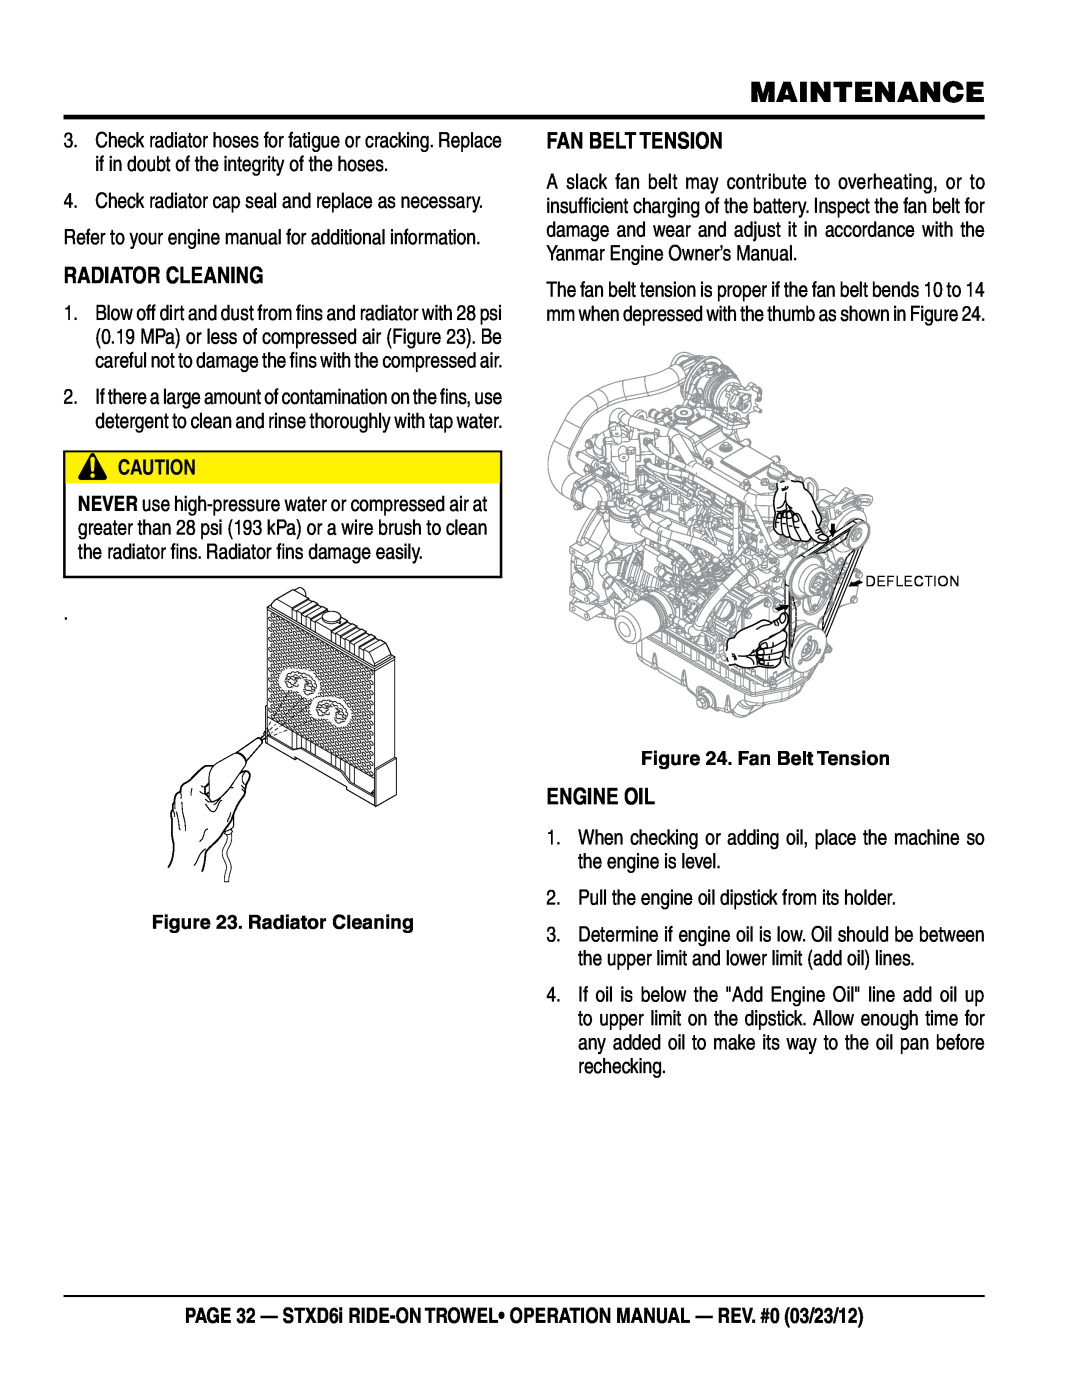 Multiquip STXD6i operation manual Radiator Cleaning, fan Belt Tension, engine oil, maintenance 